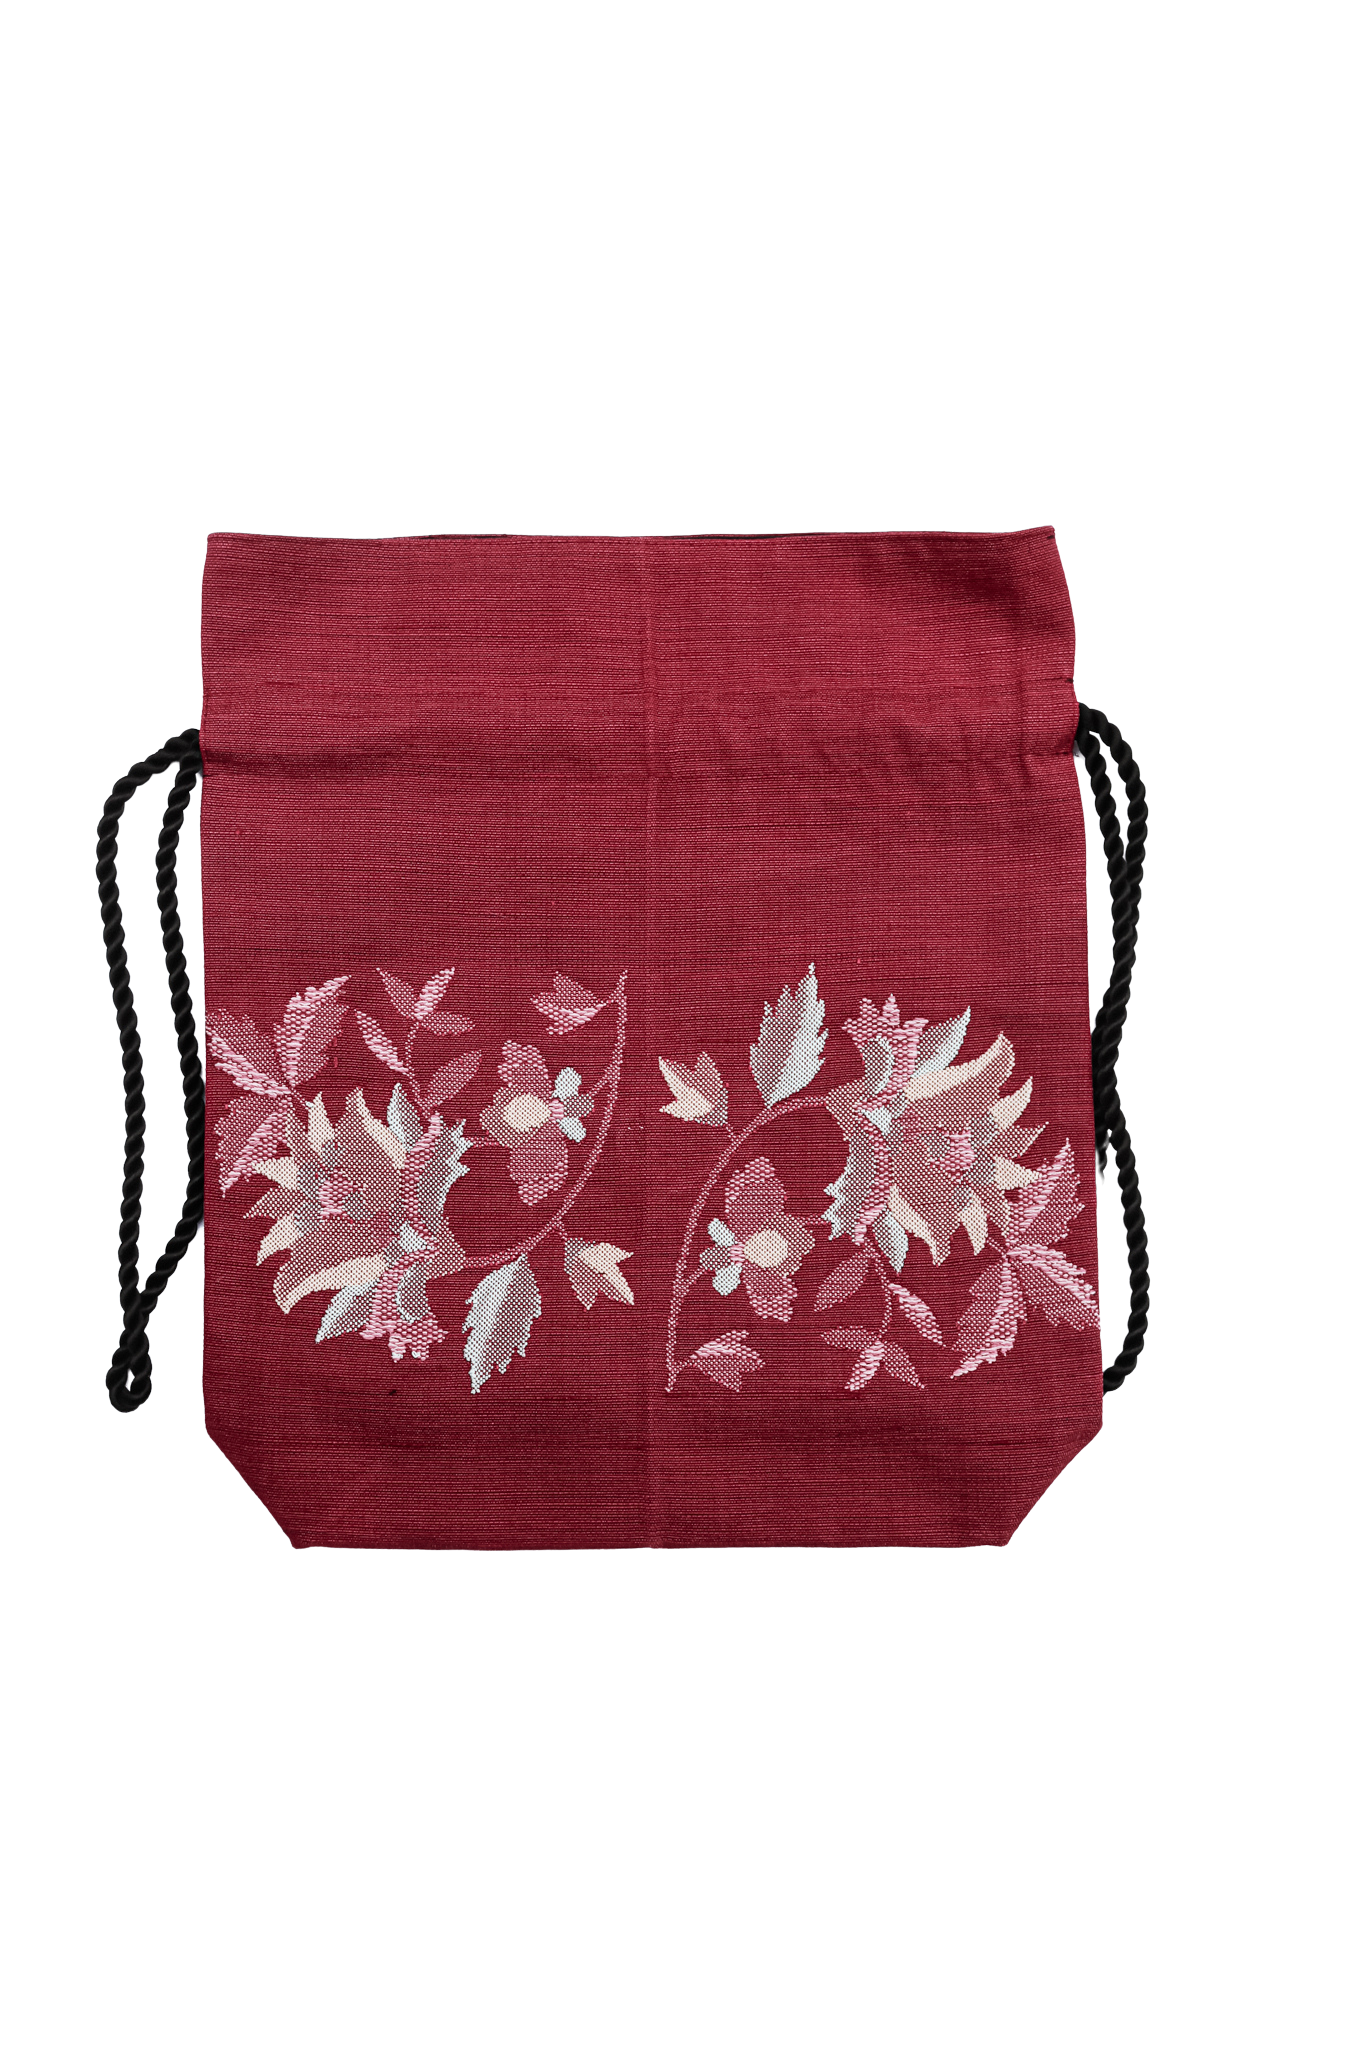 Purple Flower-Kinchaku bag